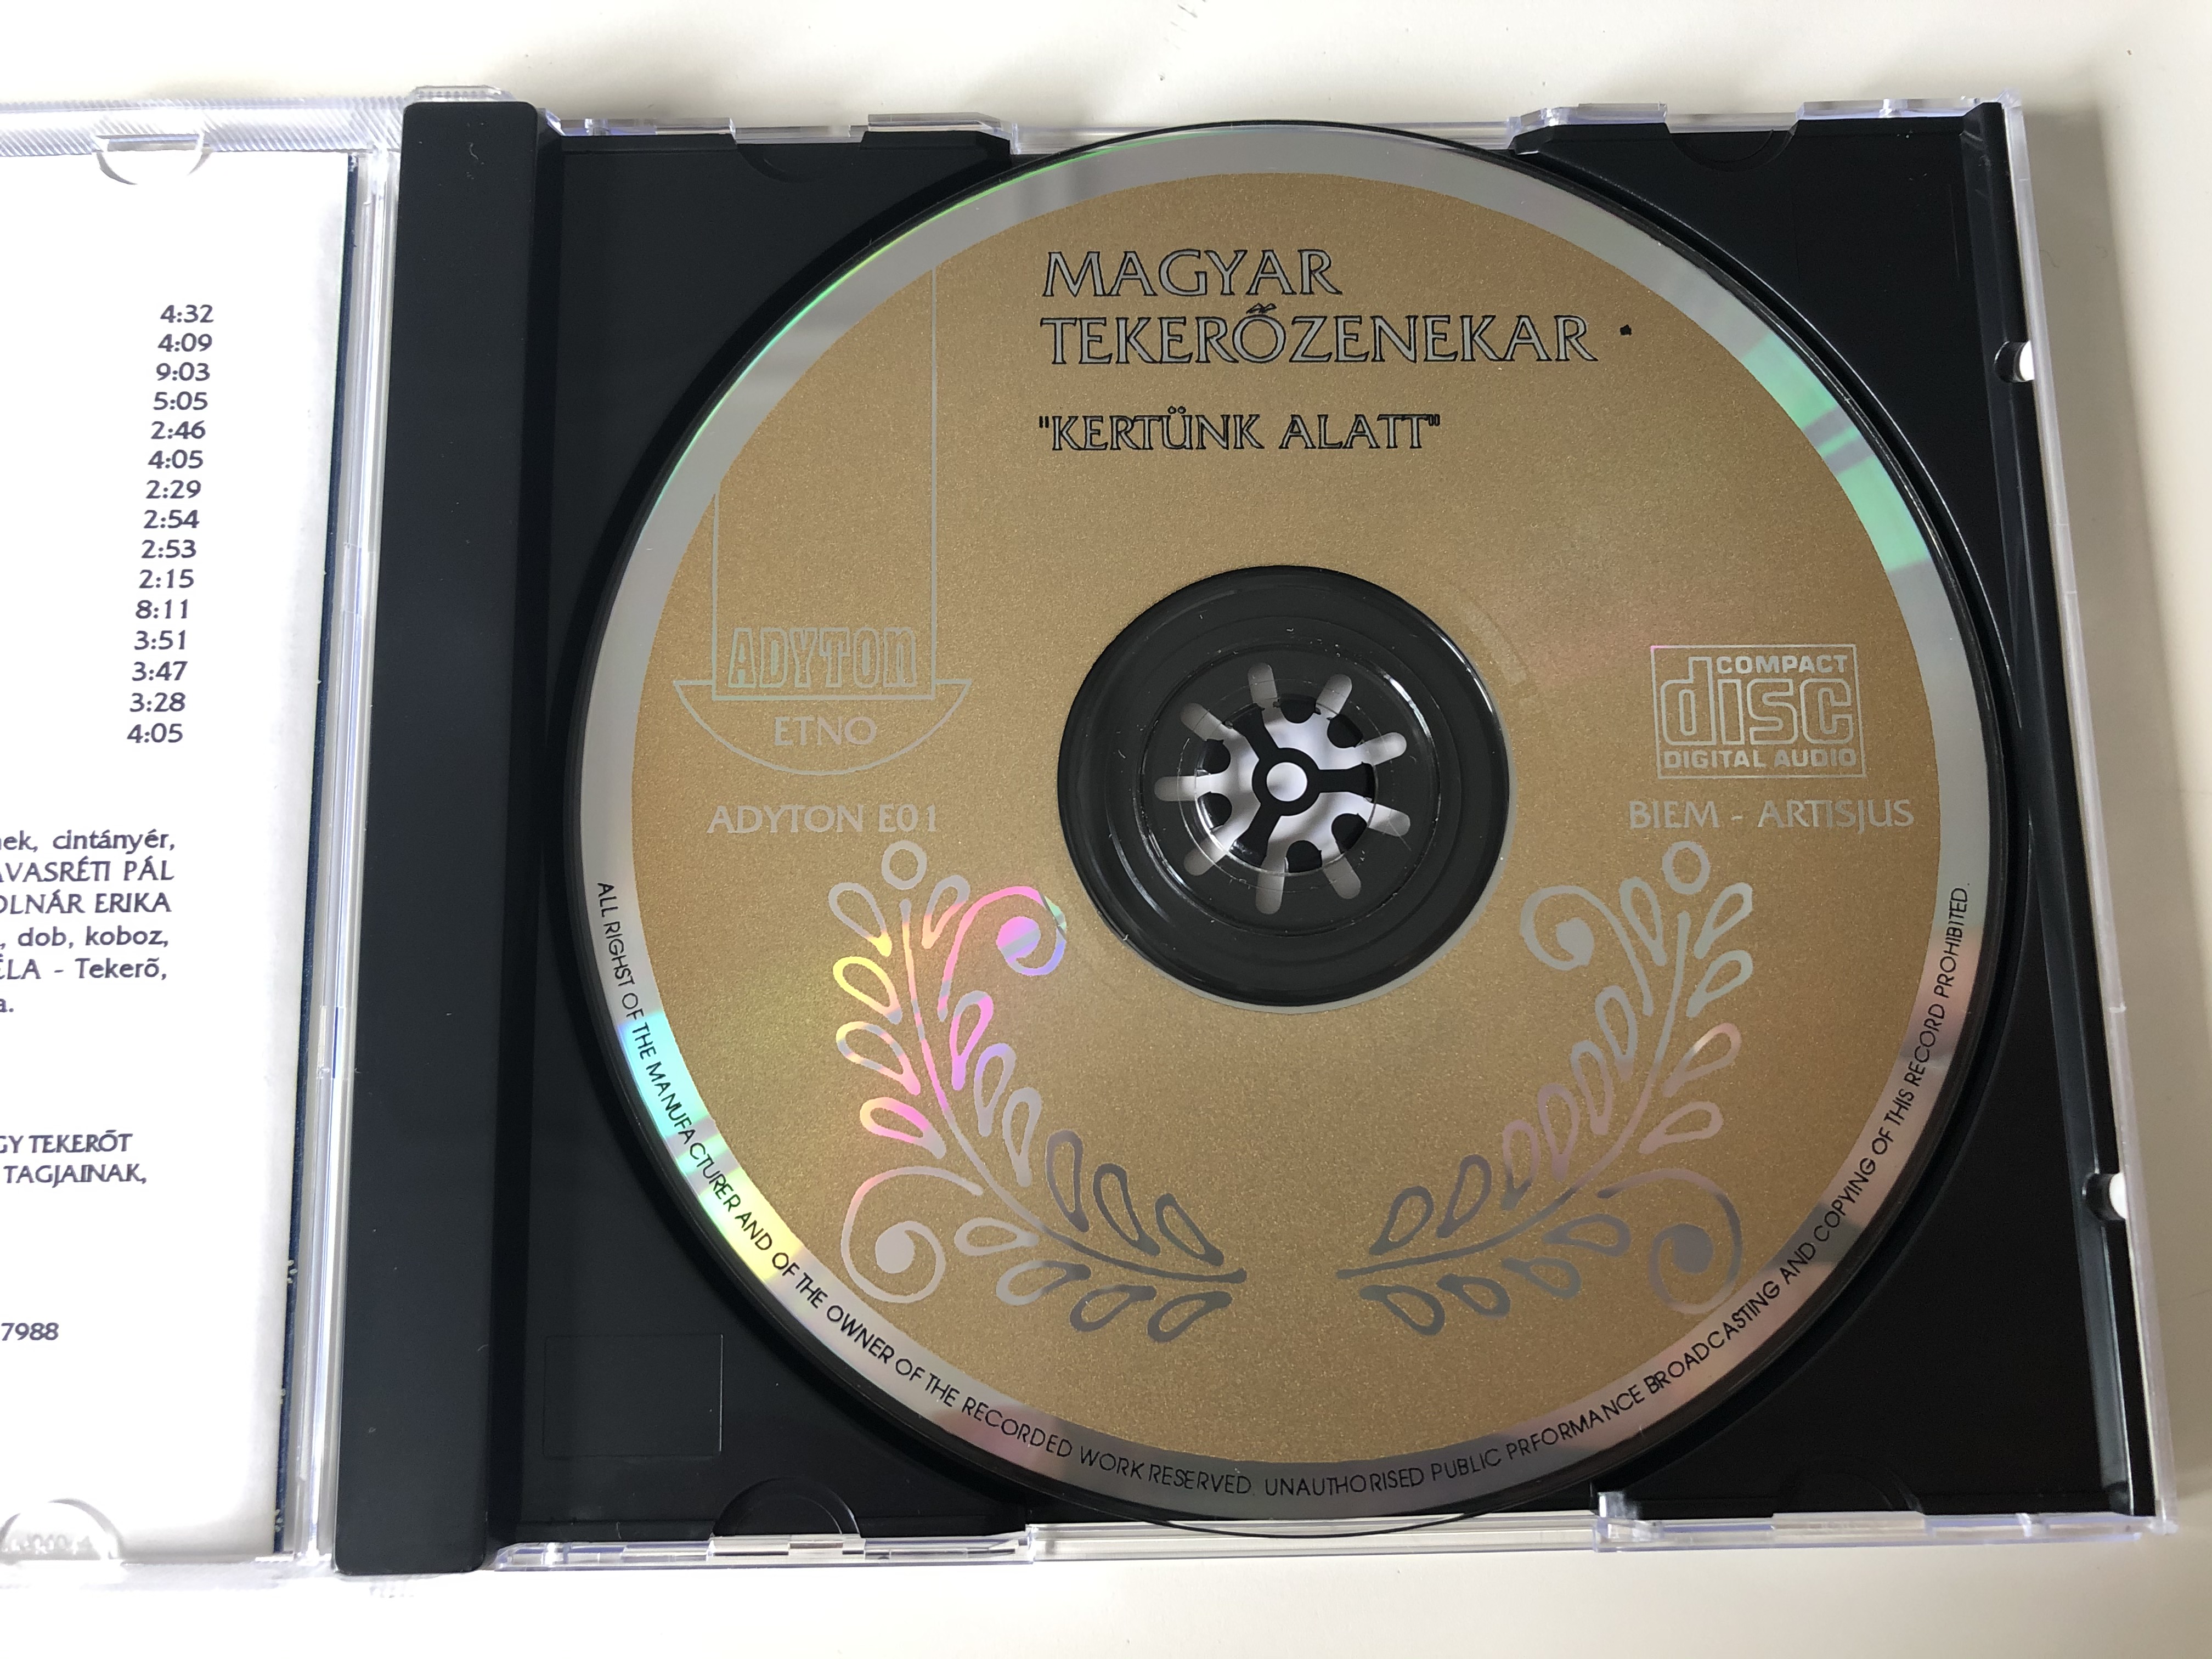 magyar-teker-zenekar-kert-nk-alatt-fon-records-audio-cd-1997-e01-9-.jpg